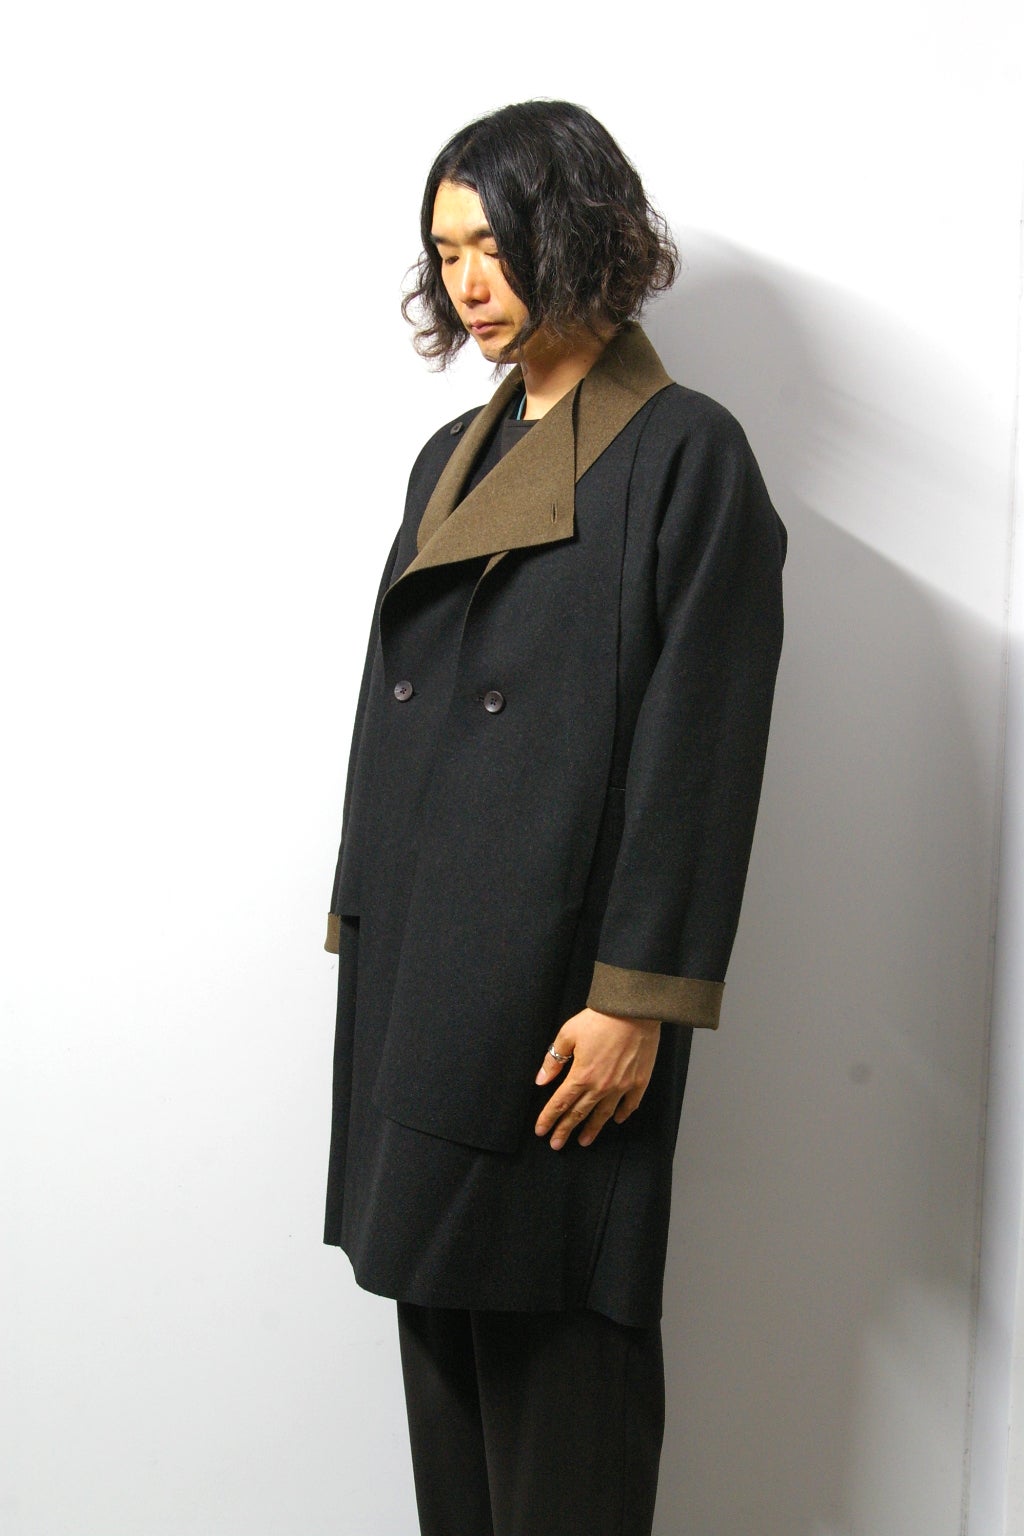 ETHOSENS(エトセンス)/Cut off muffler collar coat/Black 通販